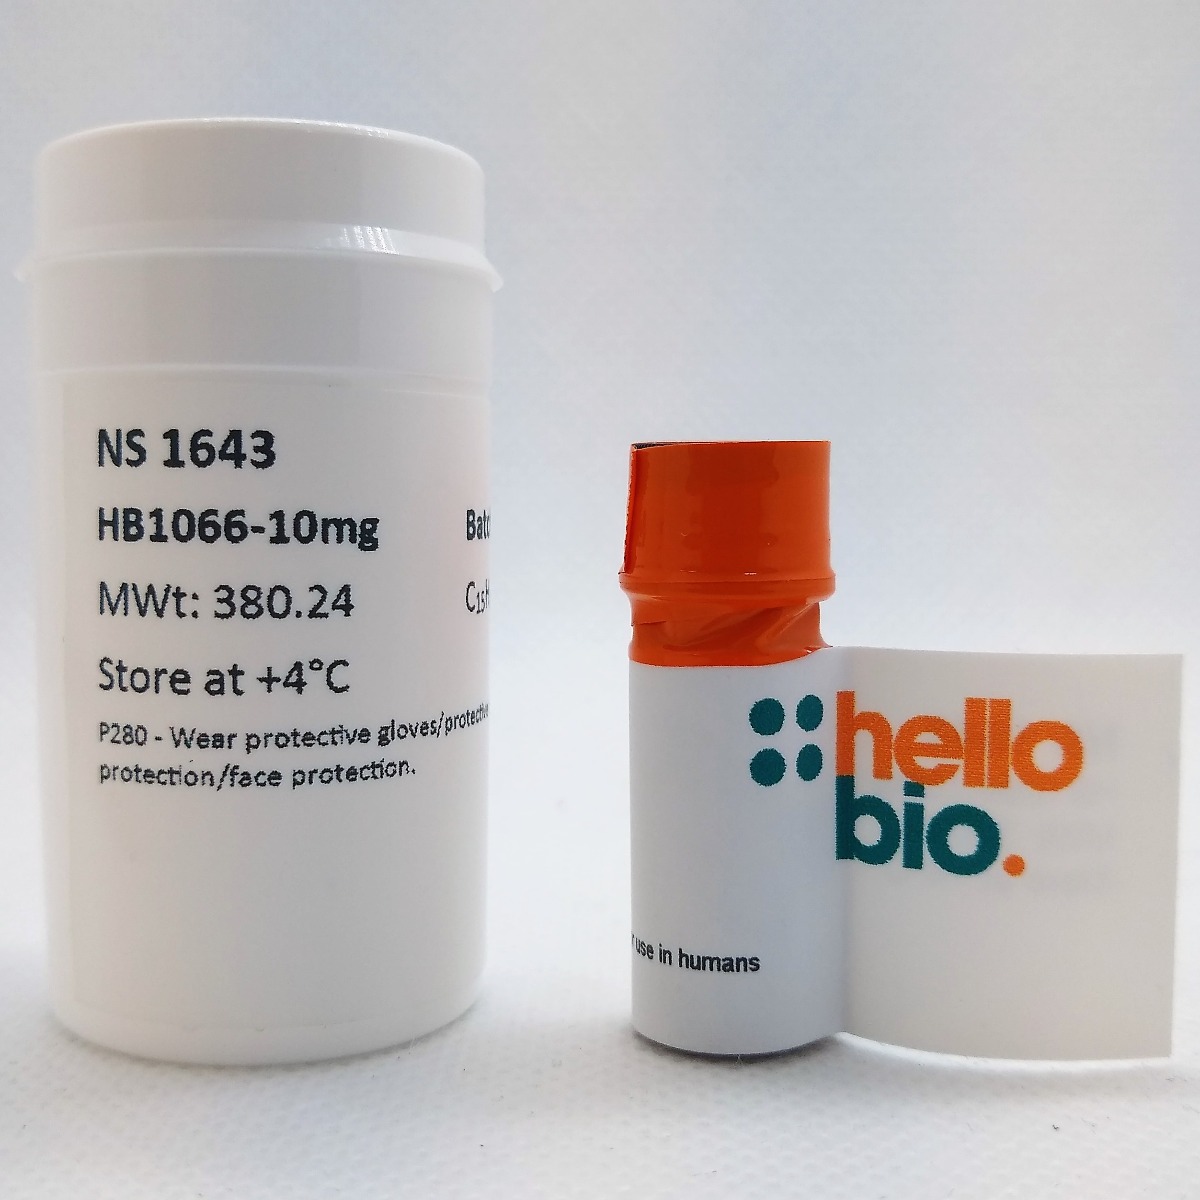 NS 1643 product vial image | Hello Bio